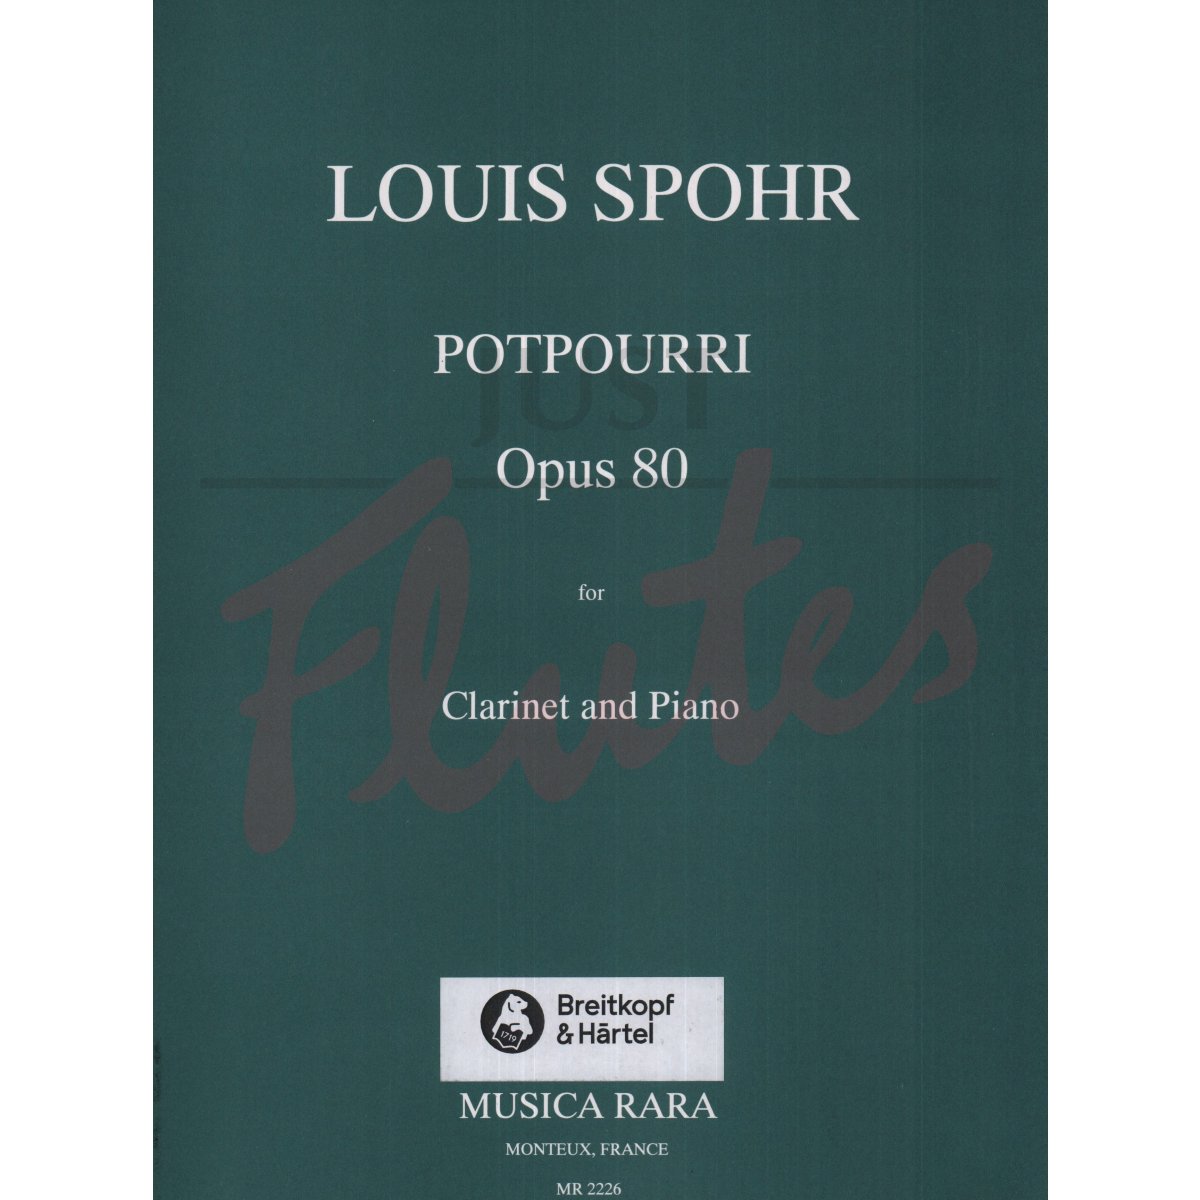 Potpourri for Clarinet and Piano